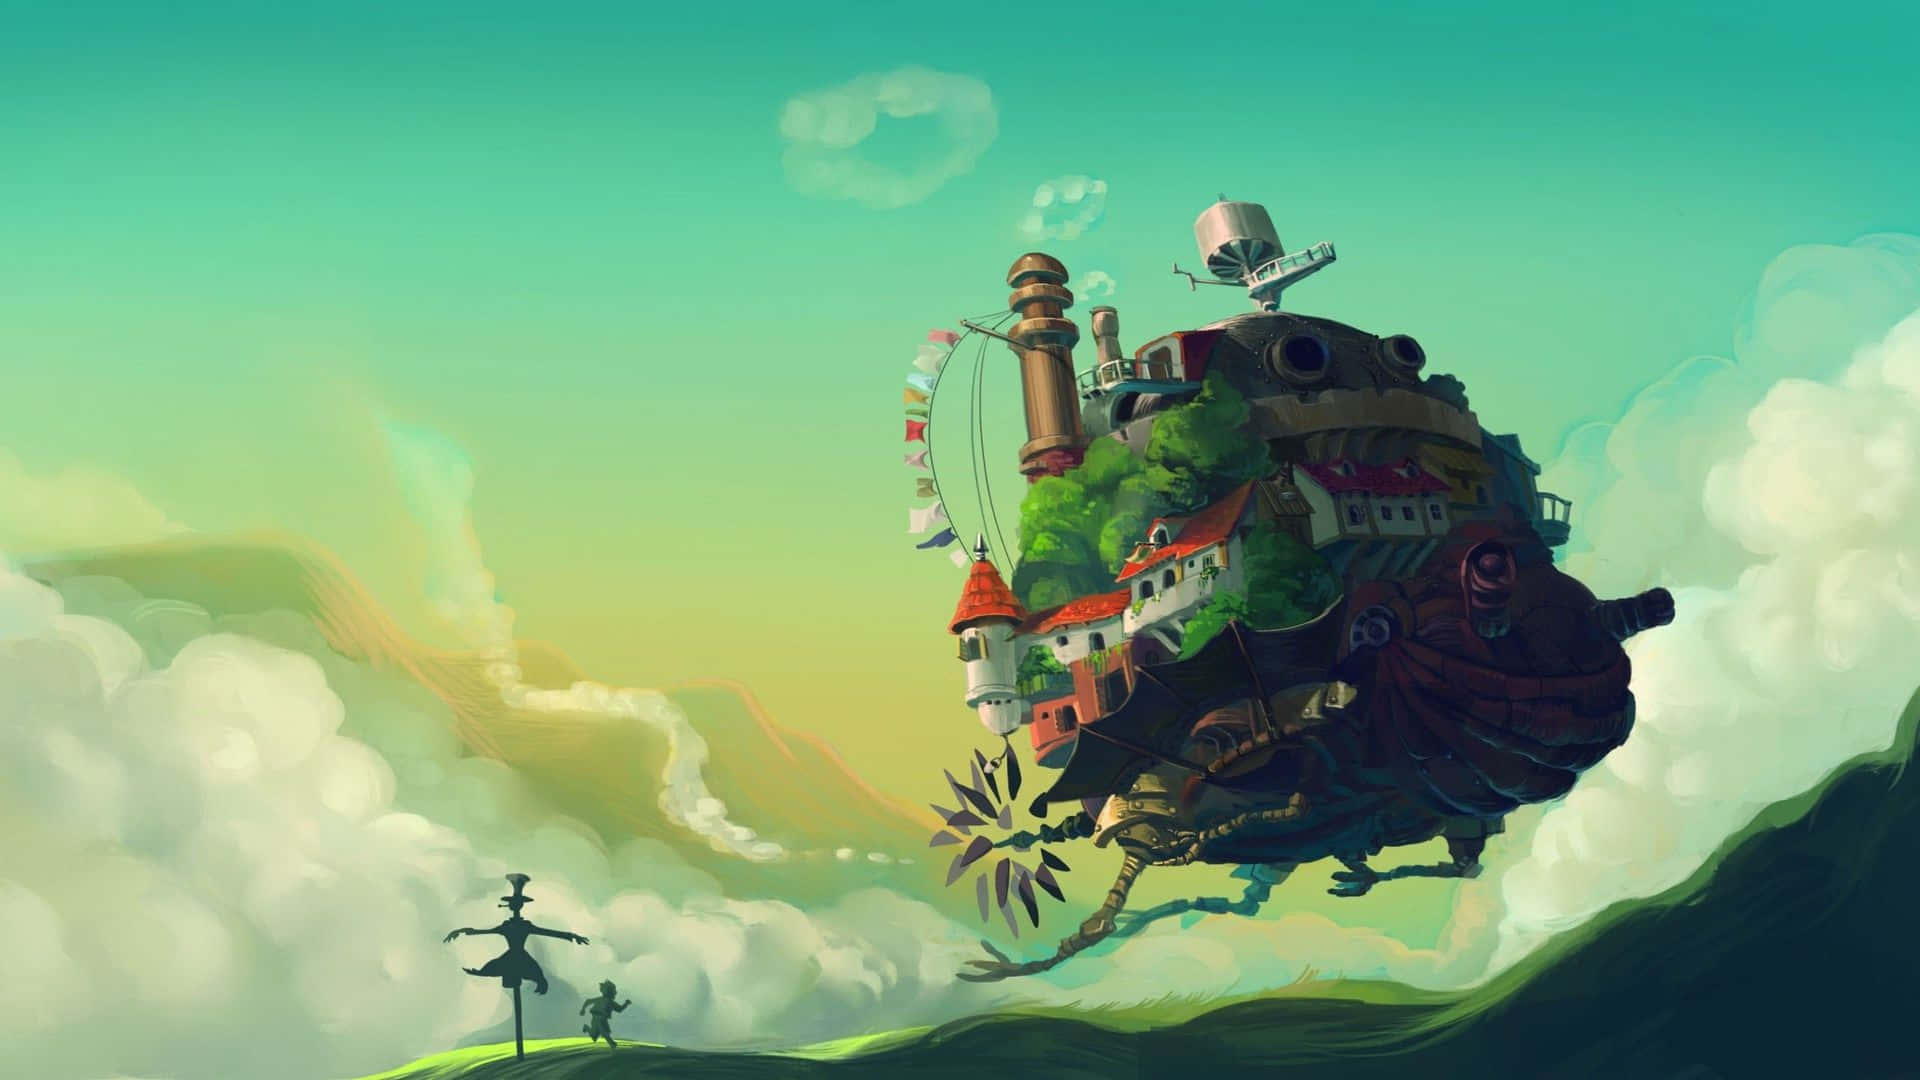 Enchanting Studio Ghibli Art Inspired by Iconic Films Wallpaper